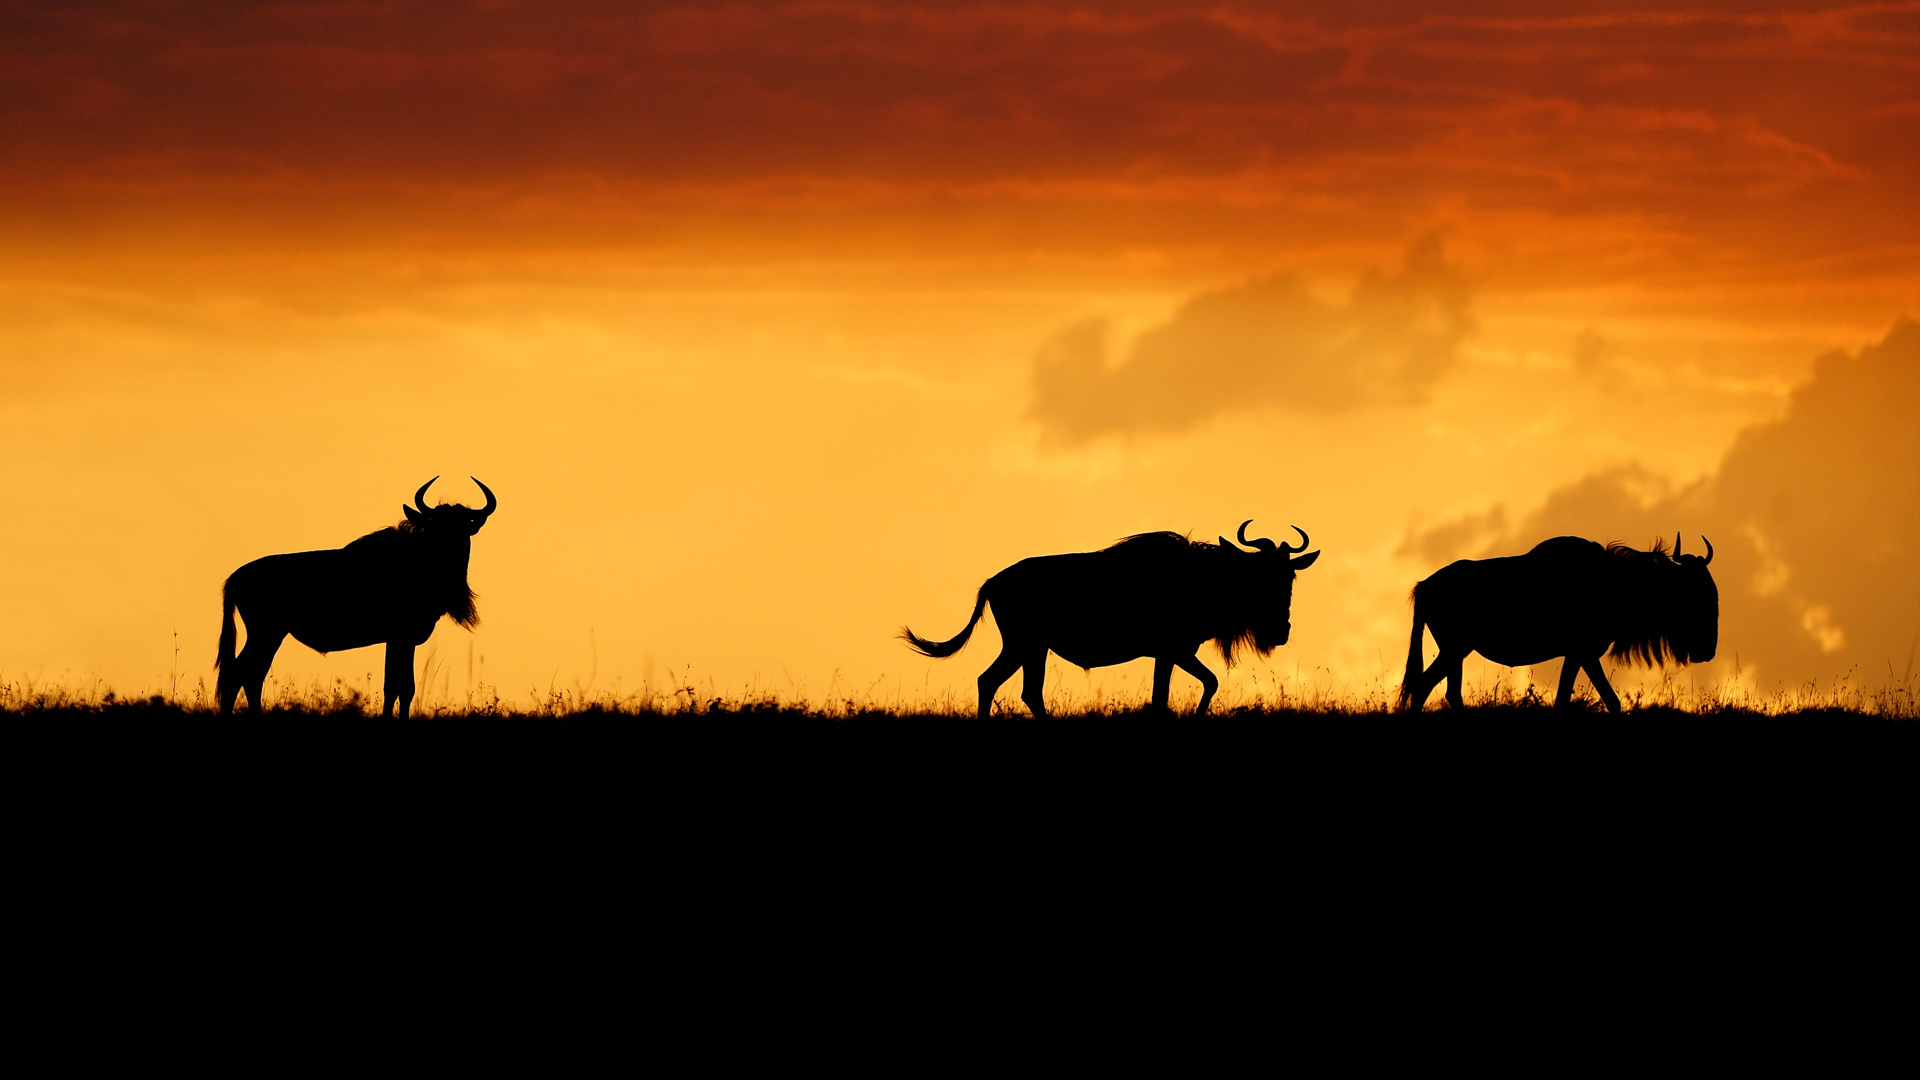 Wildebeests in the Maasai Mara